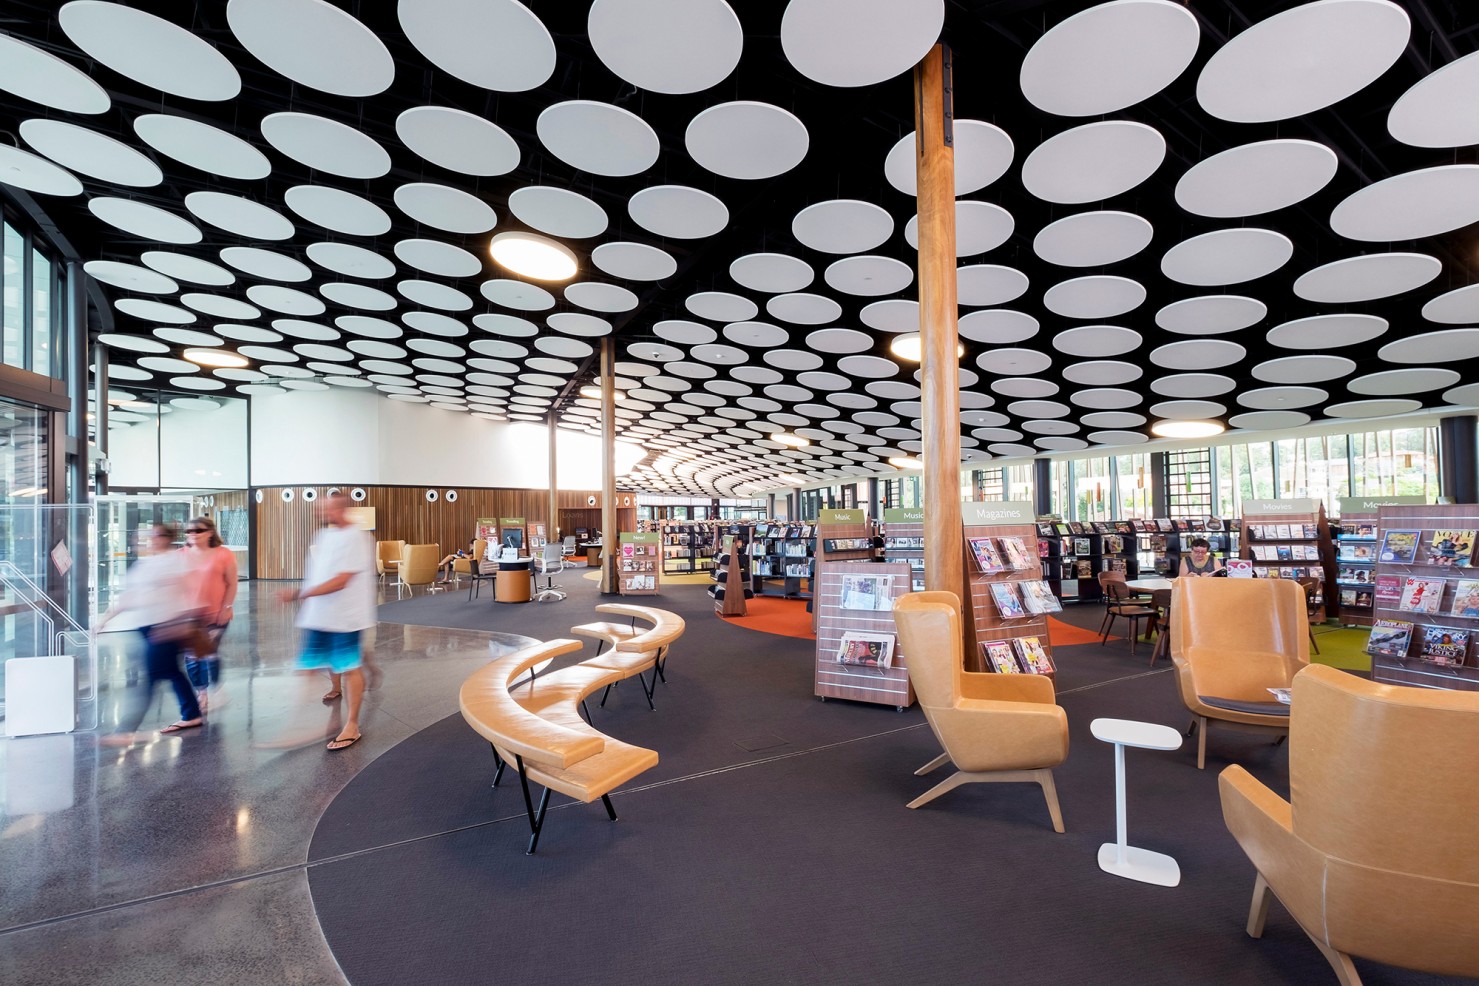 DesignInc Sydney - Shellharbour Civic Hub